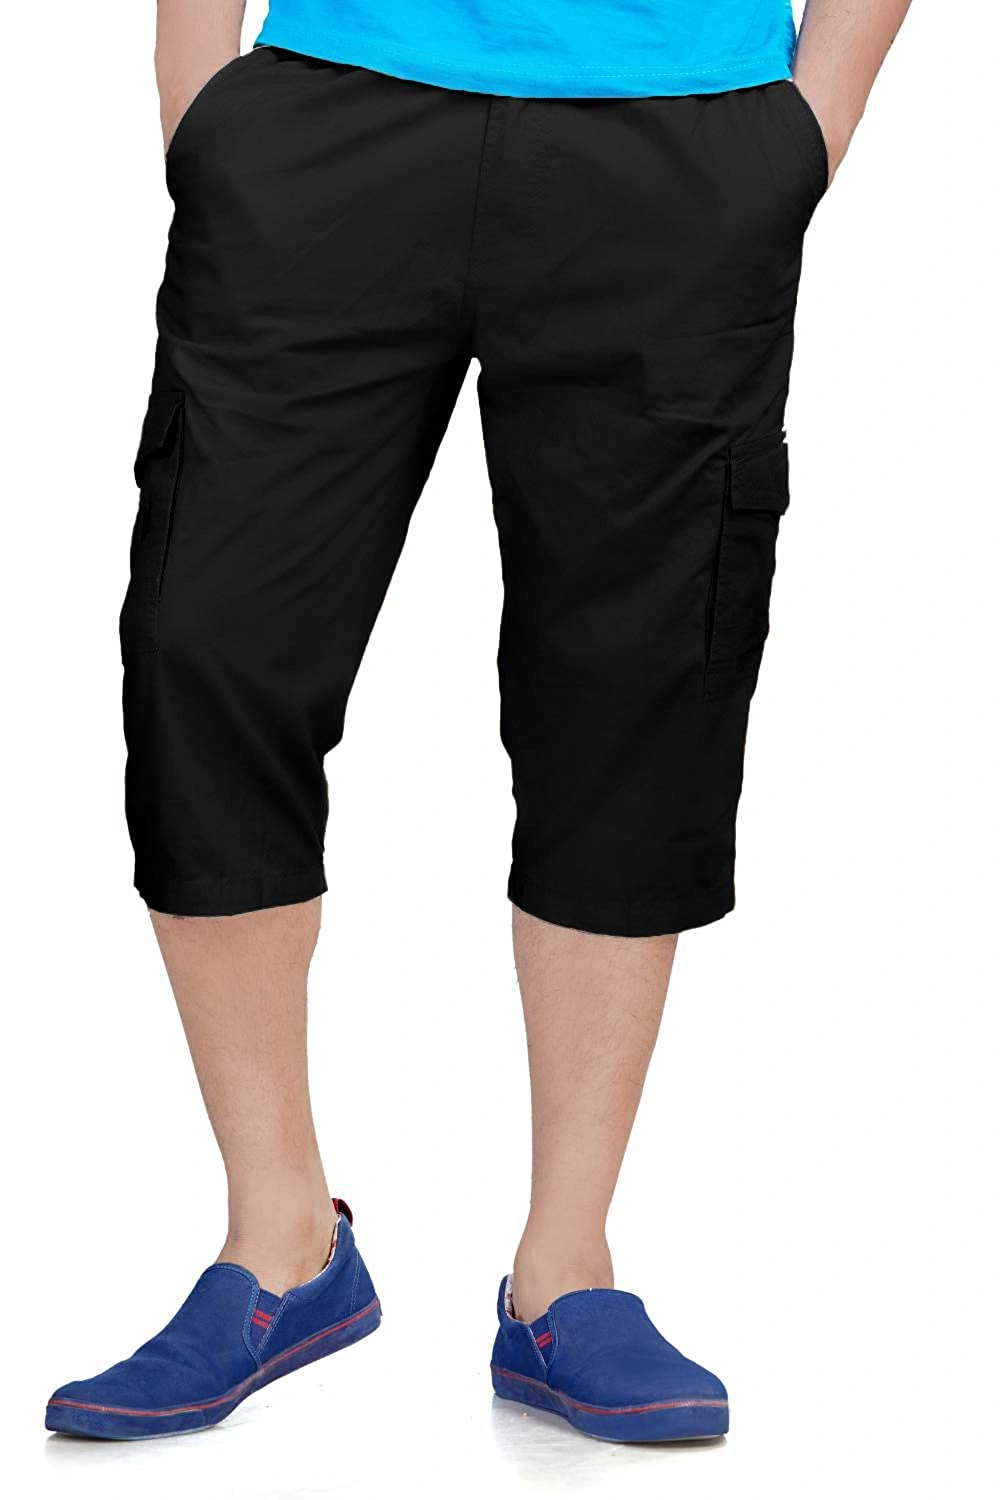 Buy Black Pyjamas & Shorts for Women by Jockey Online | Ajio.com